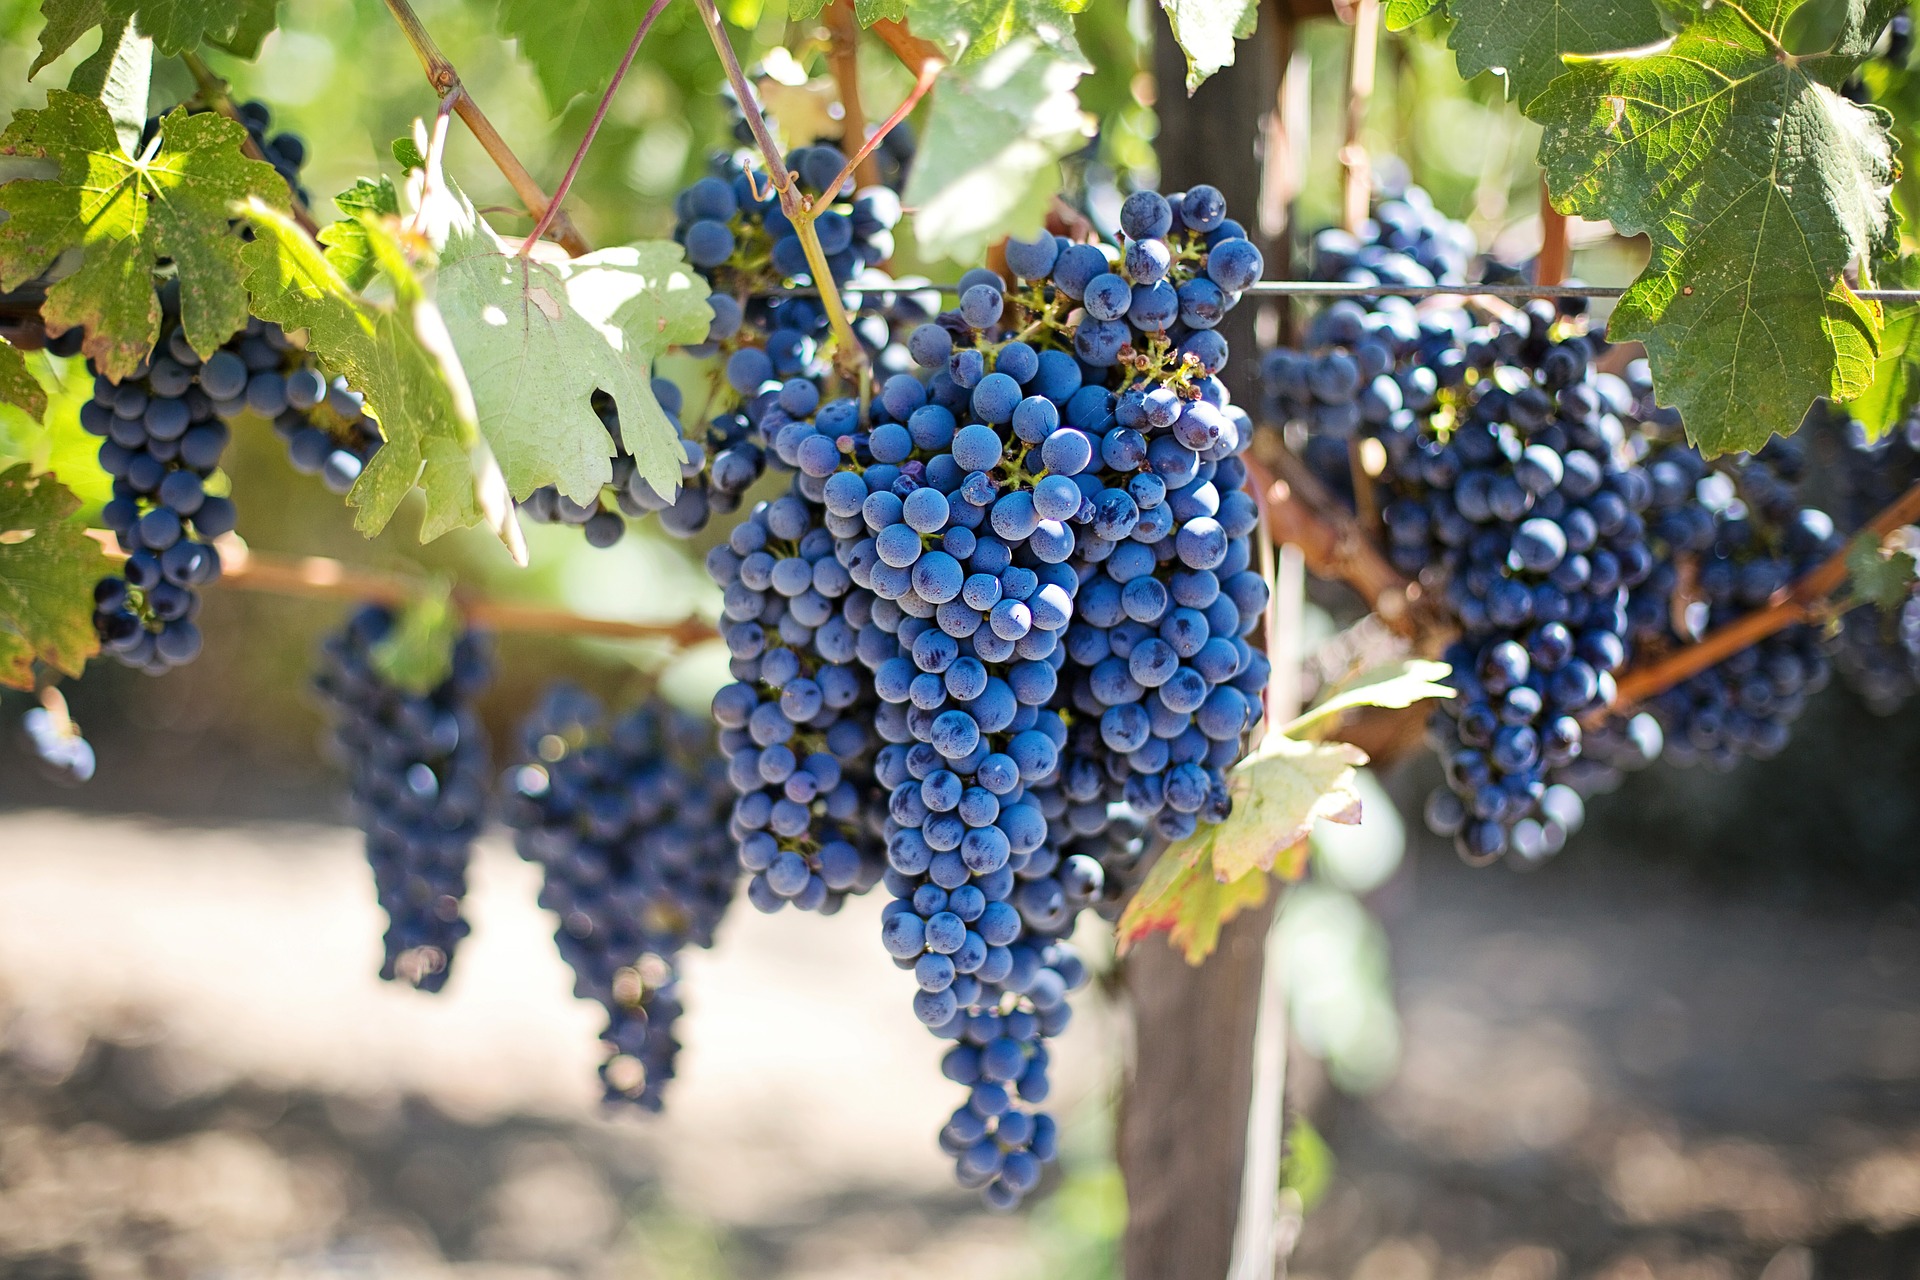 alt="grape clusters on the vine, cabernet sauvignon"